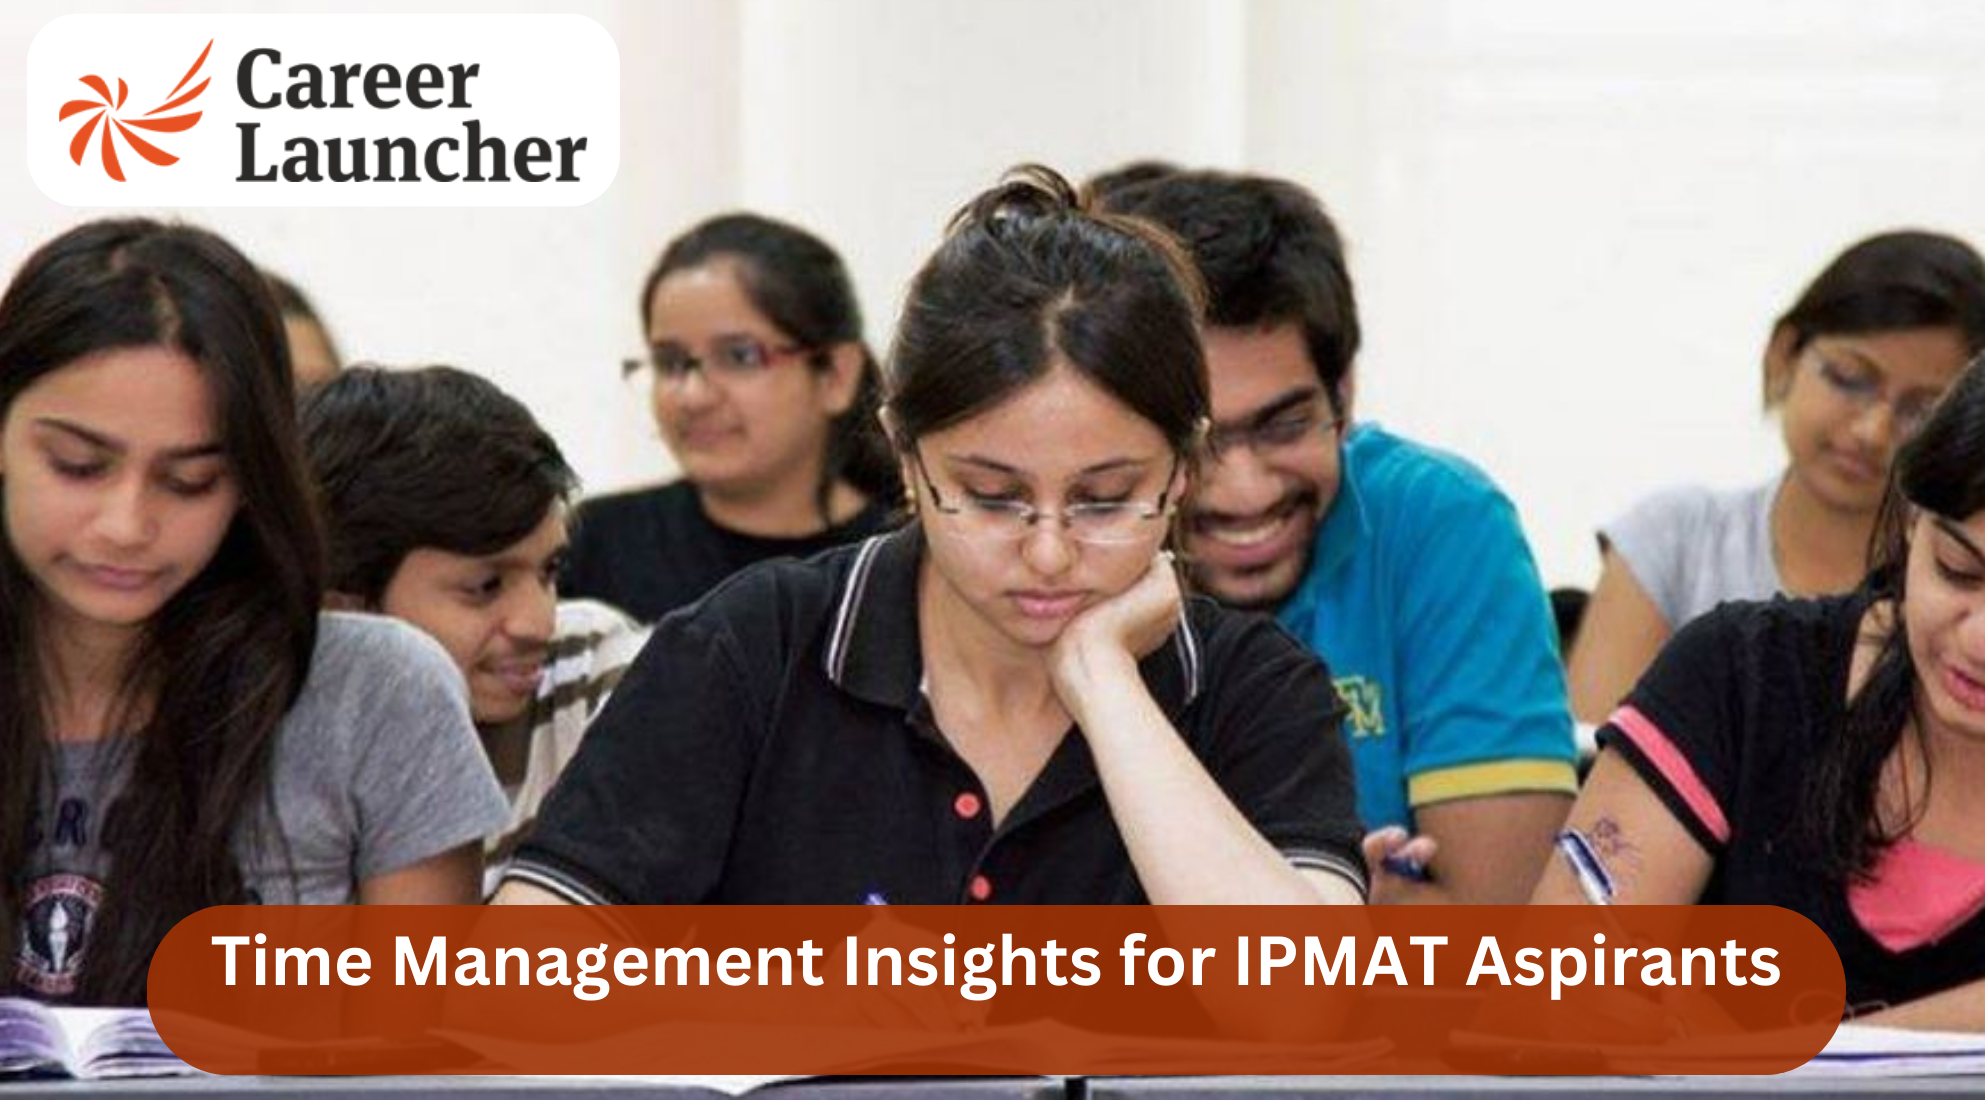 Time Management Insights for IPMAT Aspirants